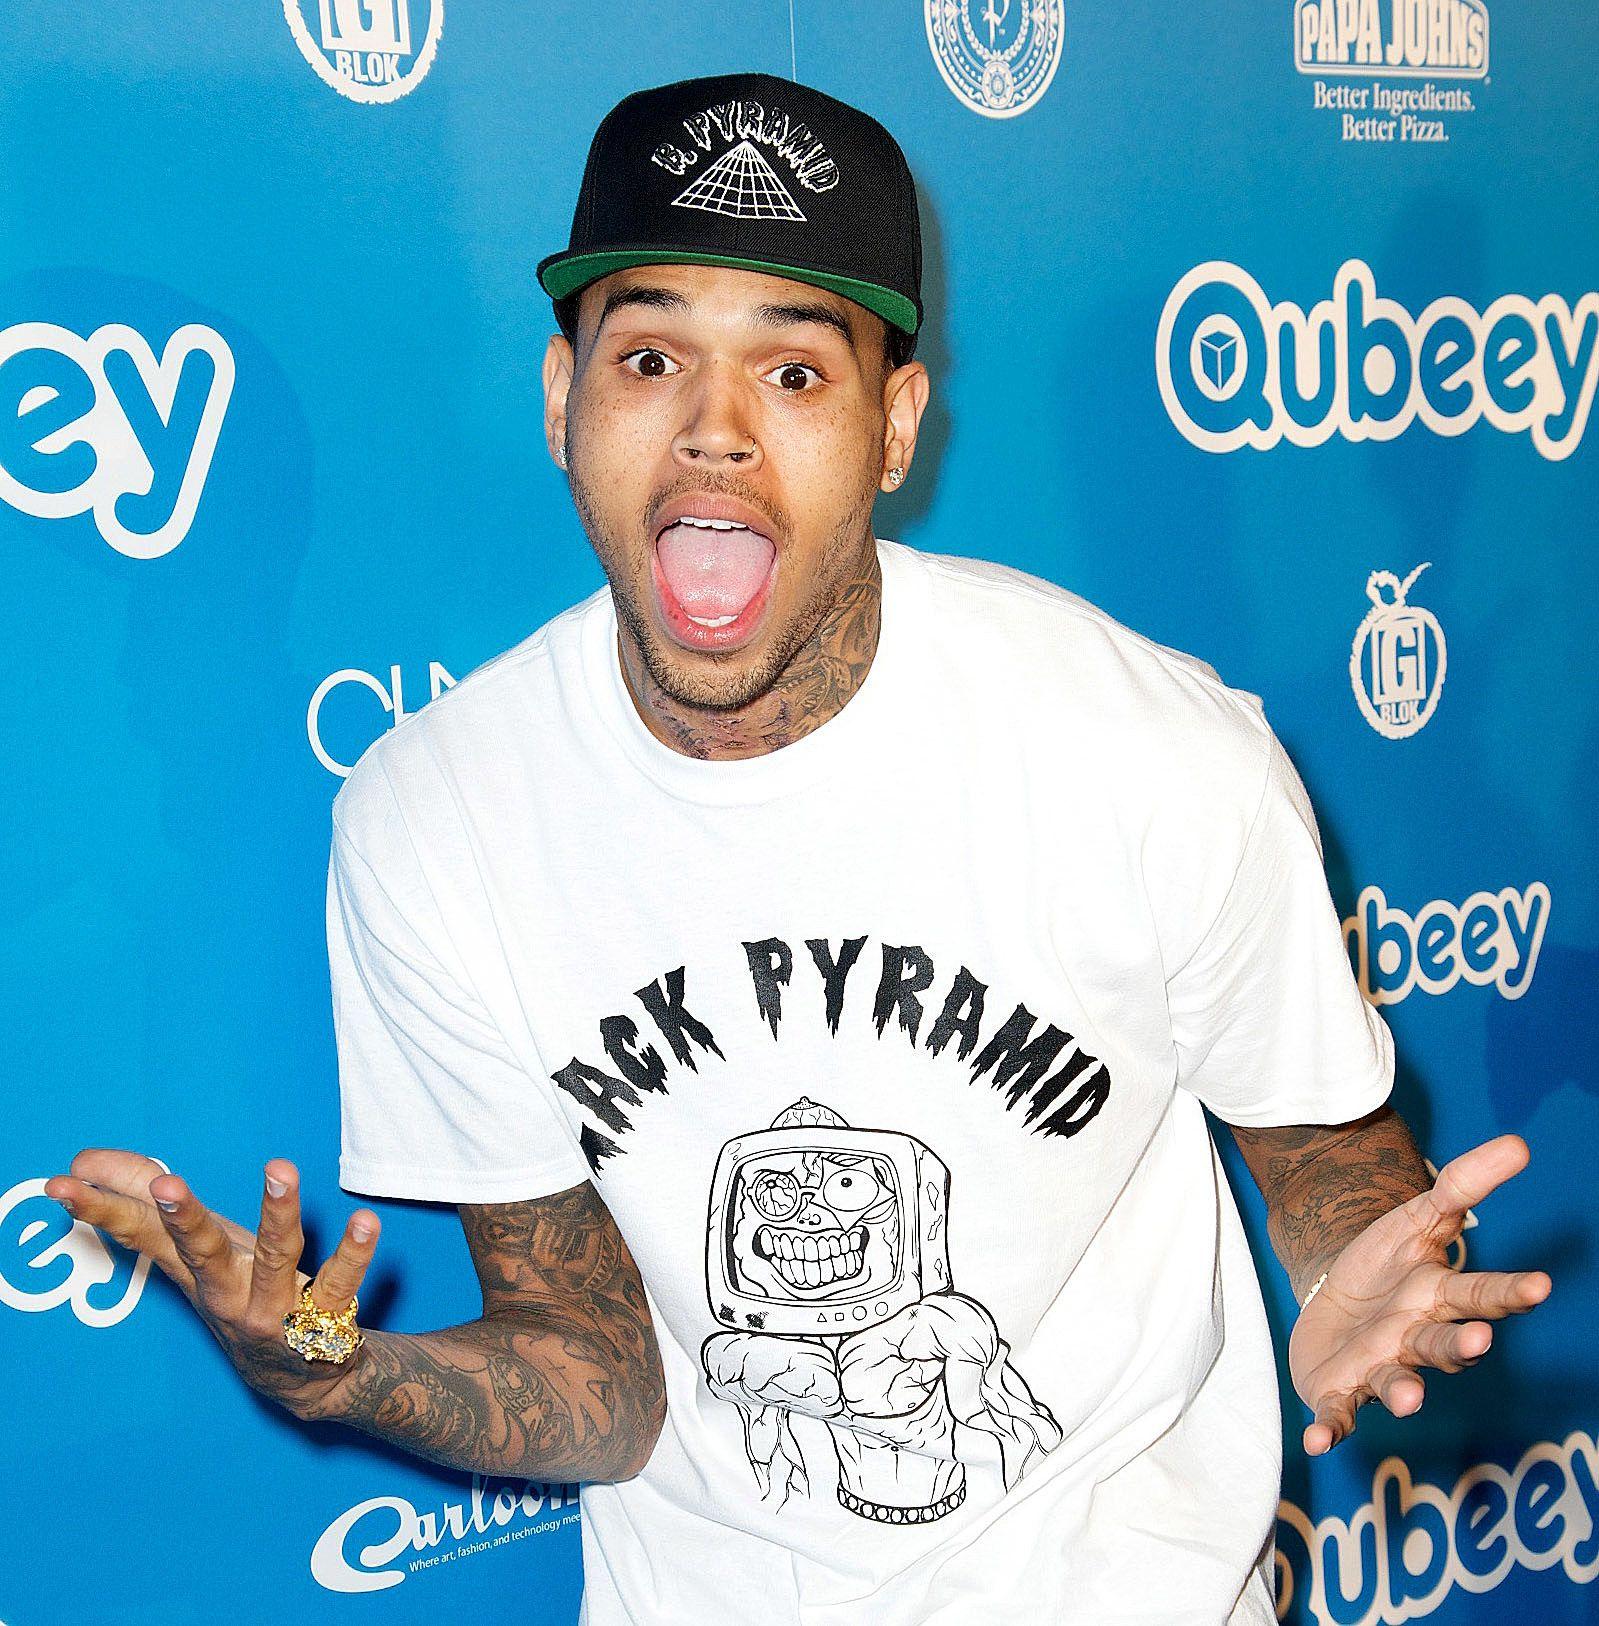 Black Pyramid Chris Brown Logo - The Ancient History Of Chris Brown's “Black Pyramid”?